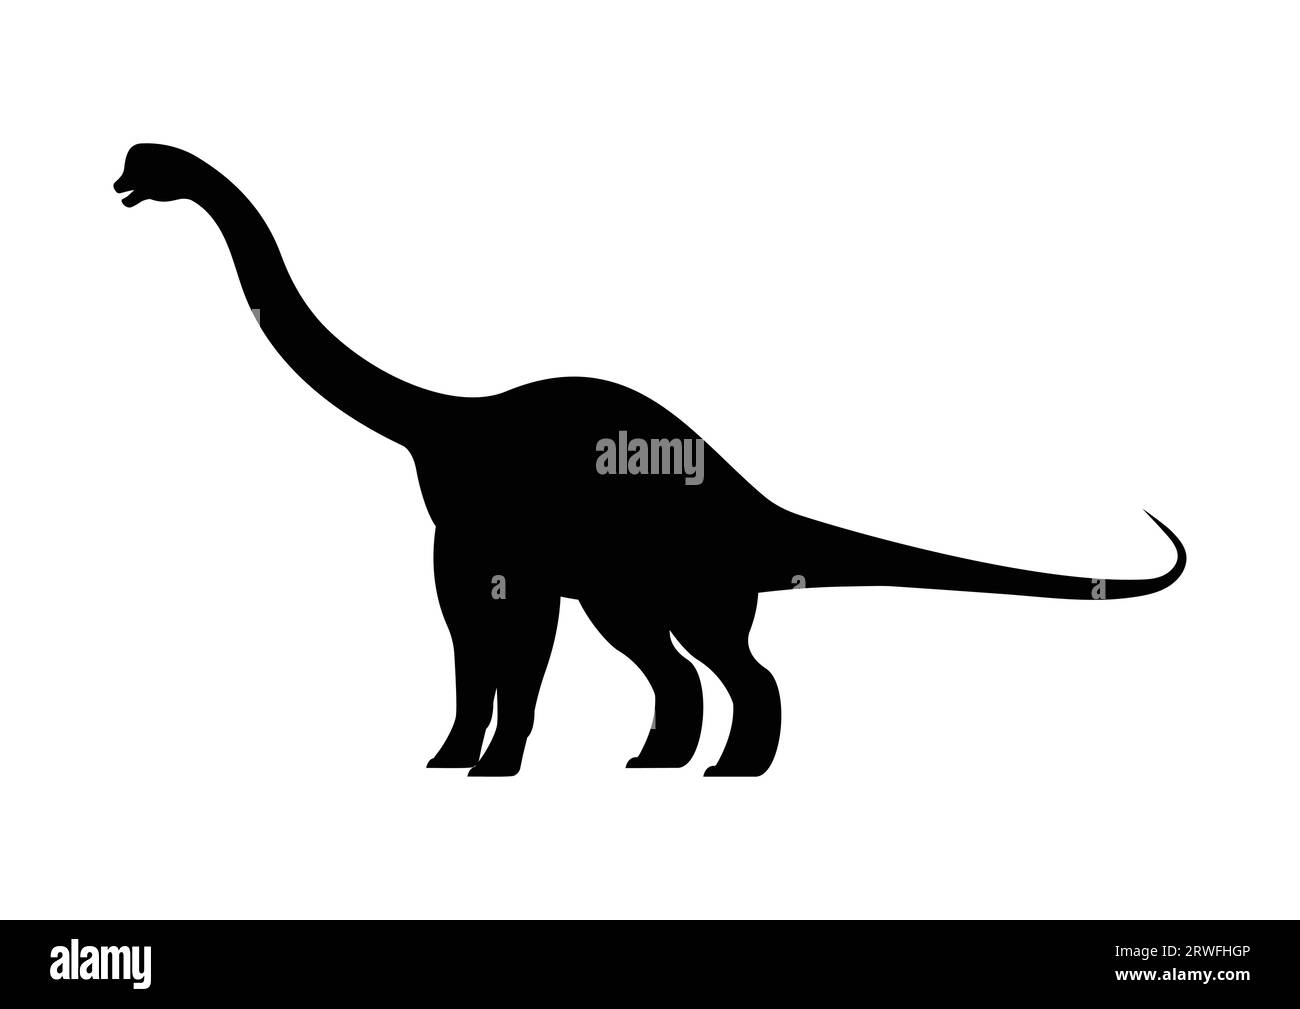 Europasaurus Dinosaur Silhouette Vector Isolated on White Background Stock Vector